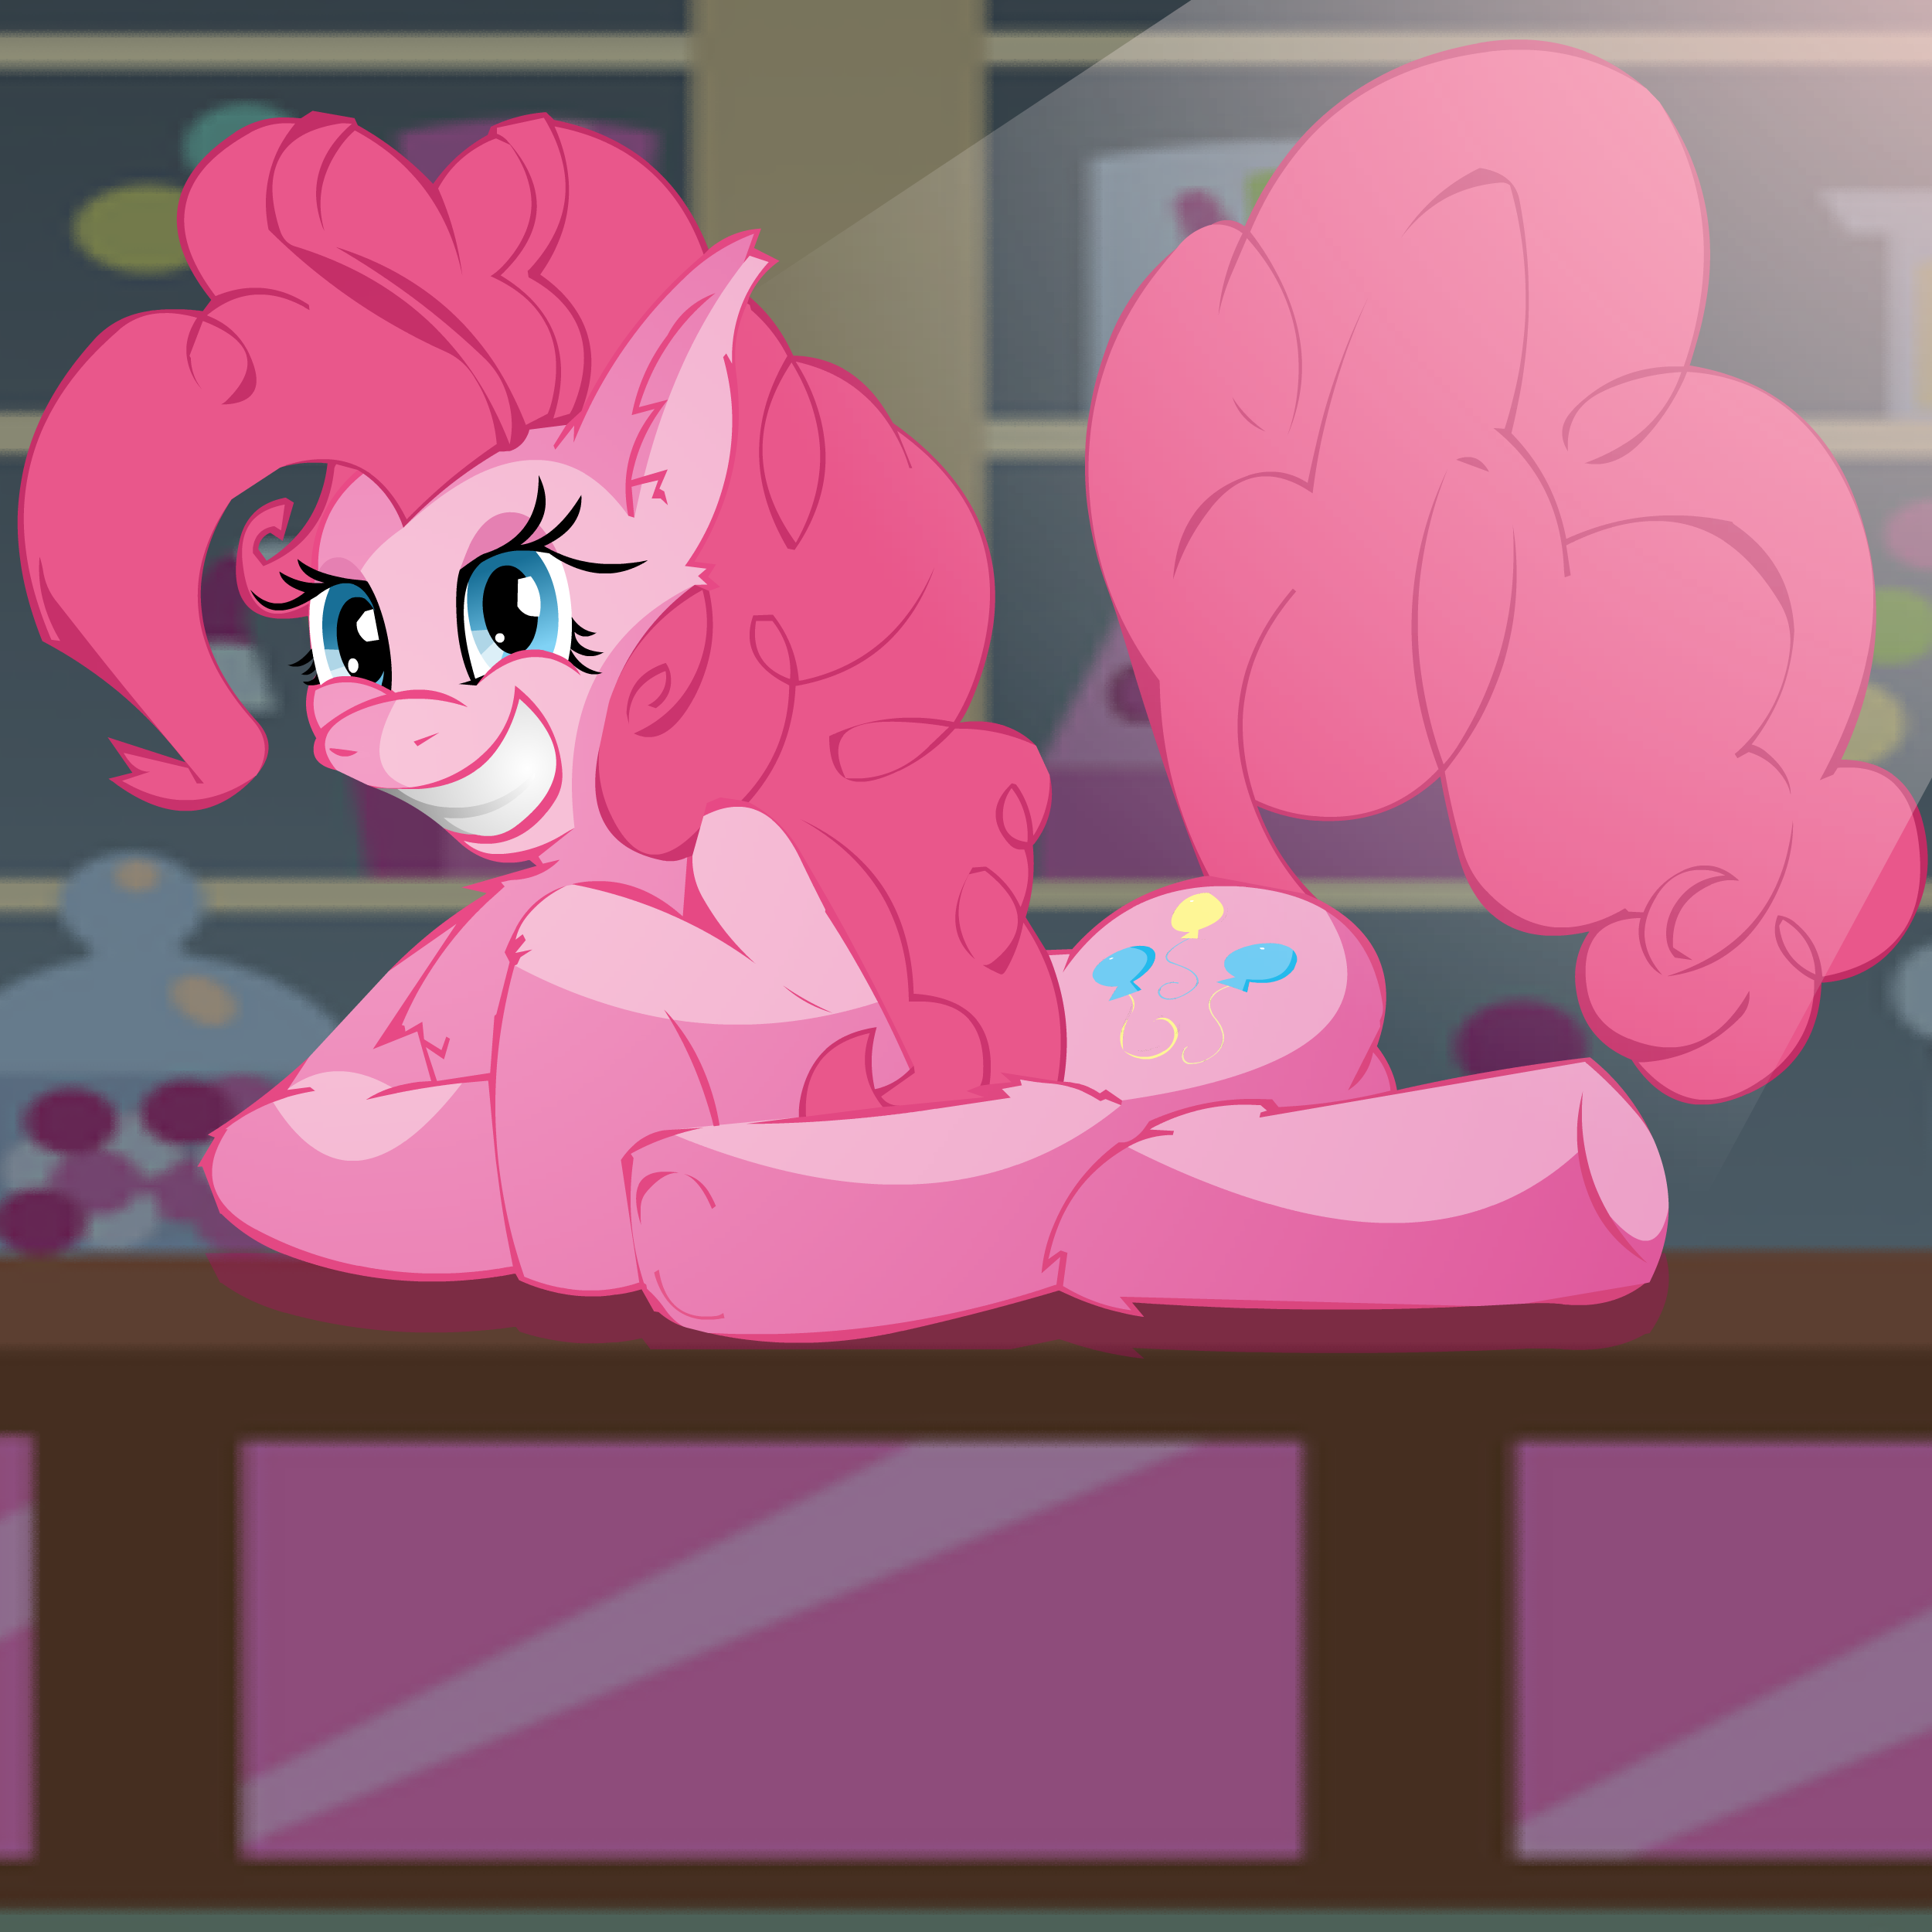 Играй пинки пай. My little Pony Cooking with Pinkie pie игра. Готовка с Пинки Пай Flash игра. Готовка с Пинки Пай флеш игра 18. Пинки Пай и Биг Мак.